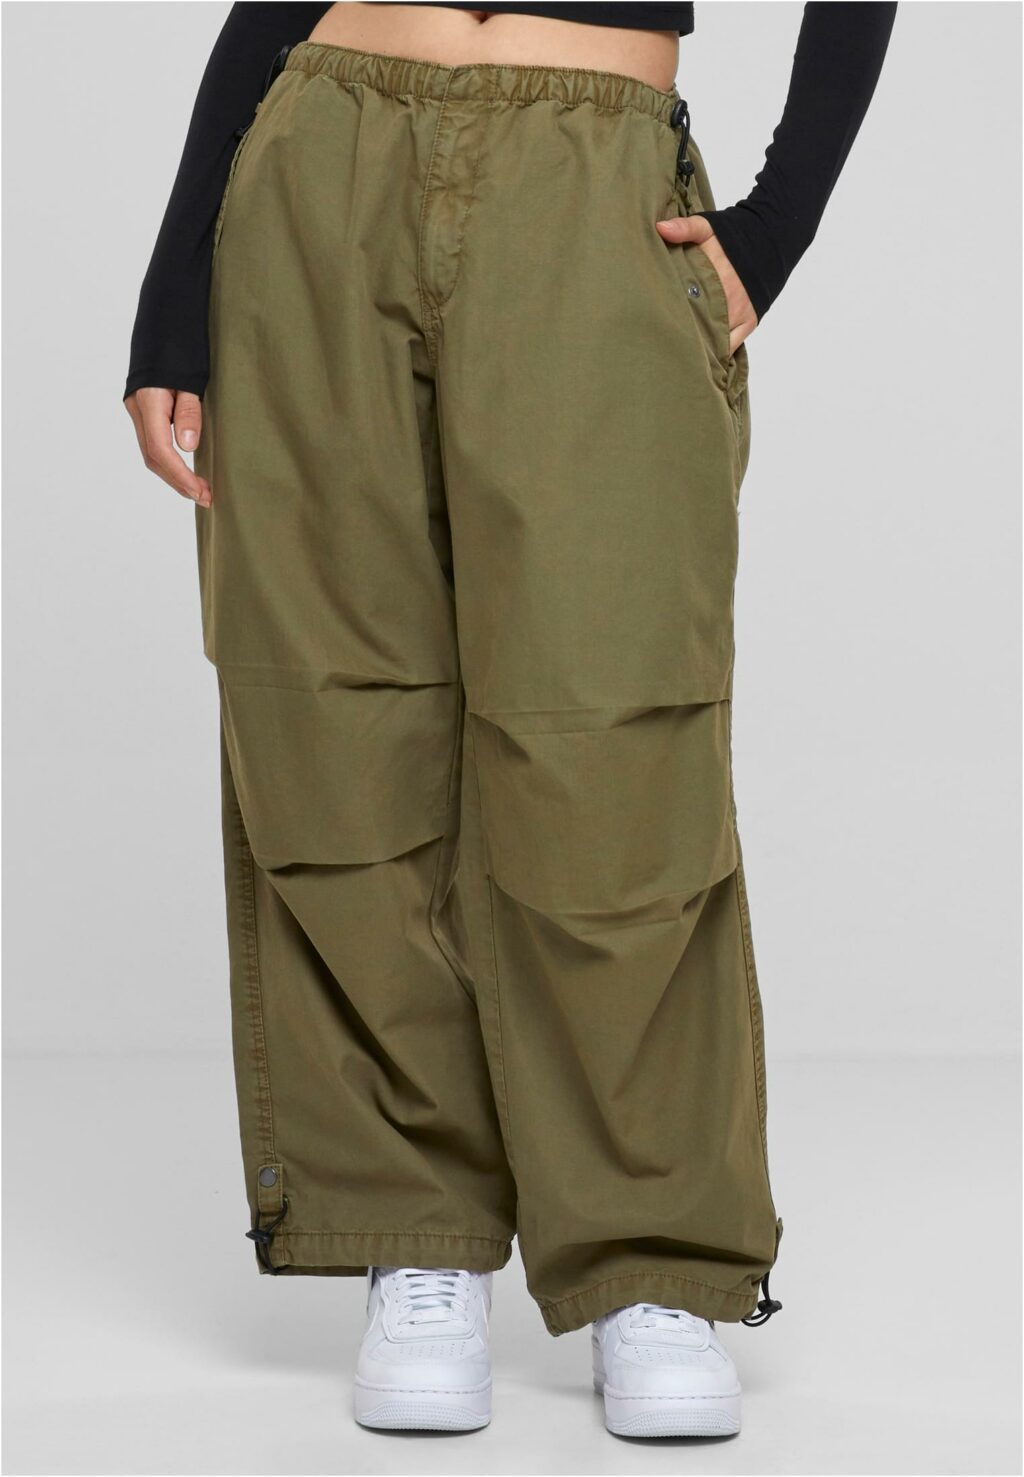 Urban Classics Ladies Cotton Parachute Pants tiniolive TB6101